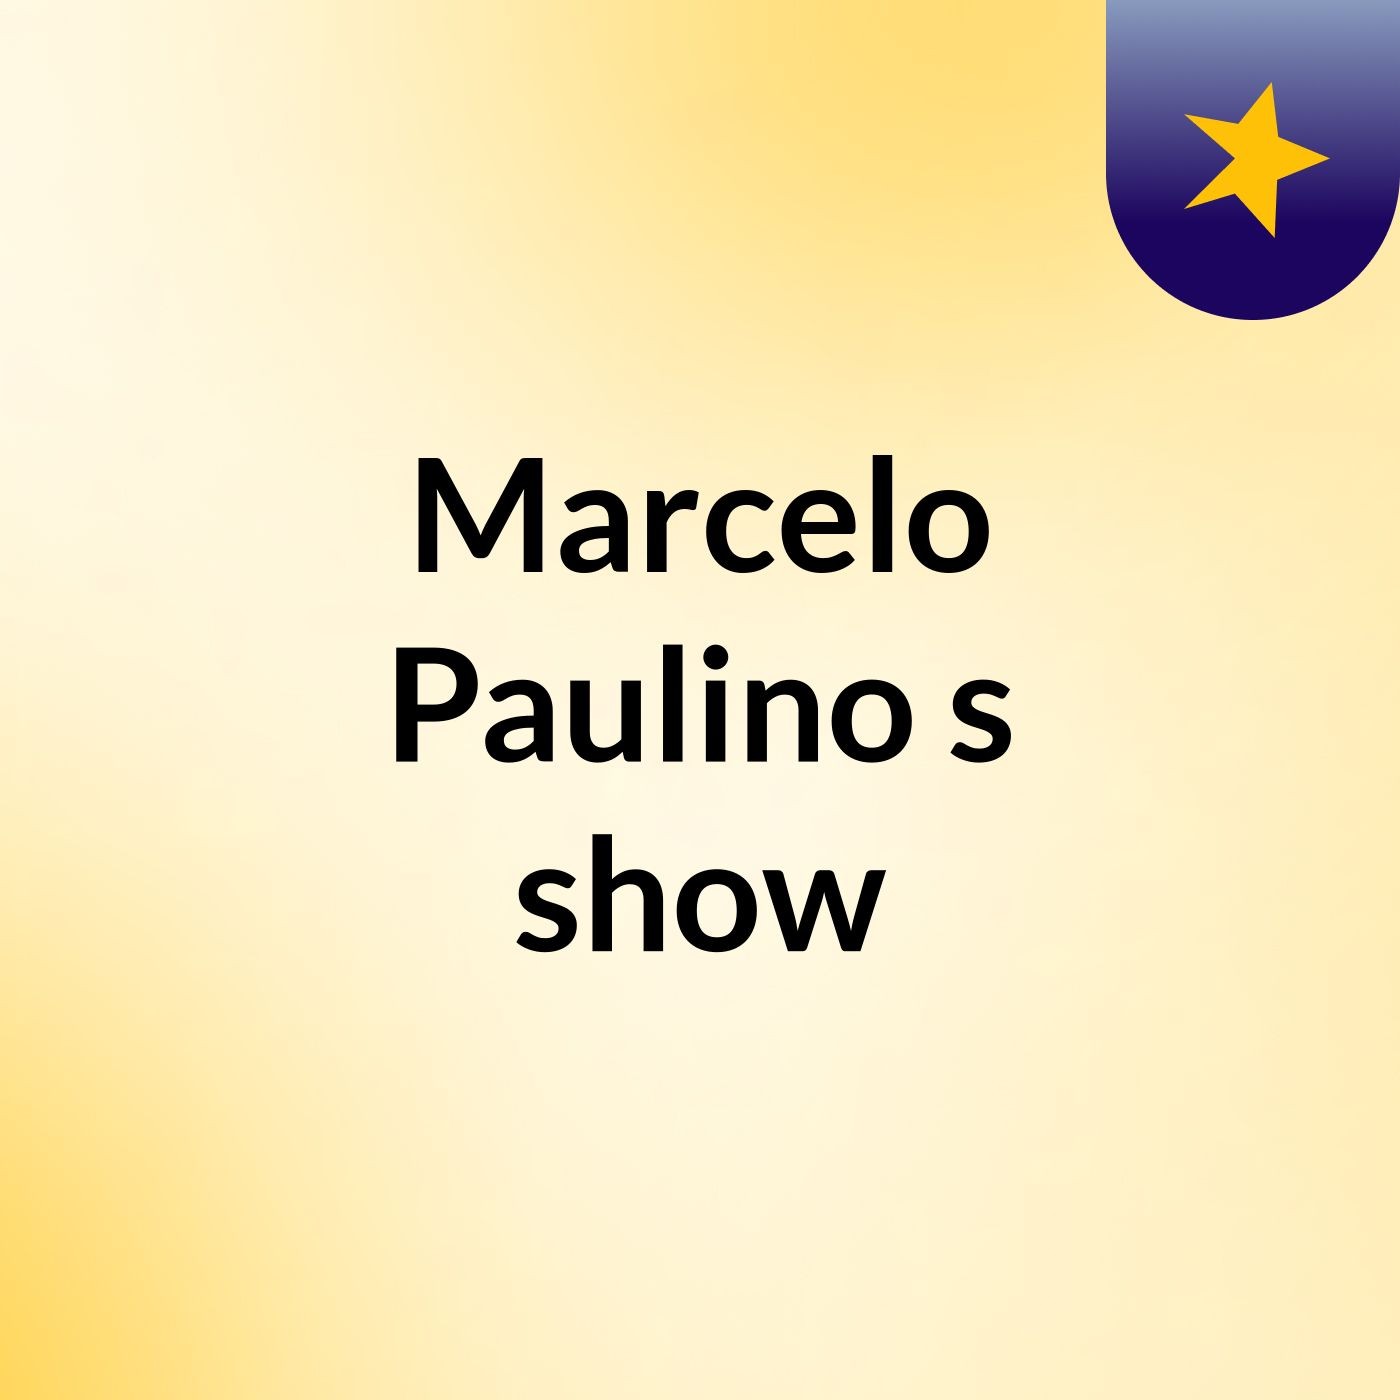 Marcelo Paulino's show